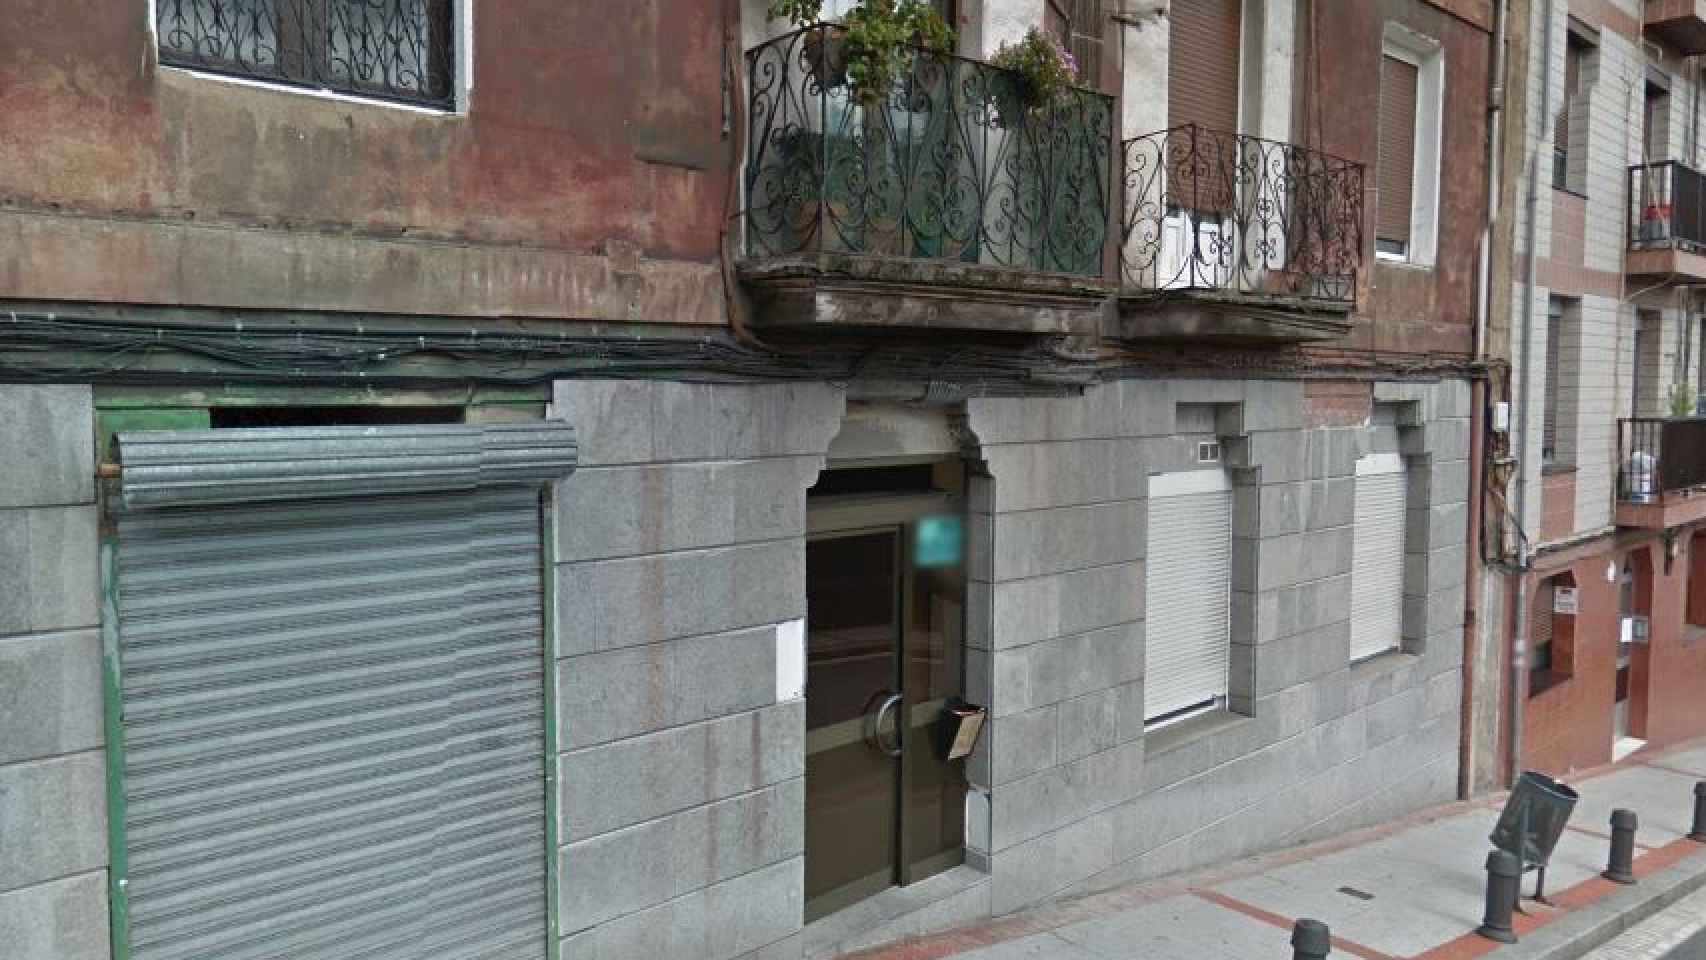 Portal del 33 de la calle La Iberia, donde fue asesinada Conchi.